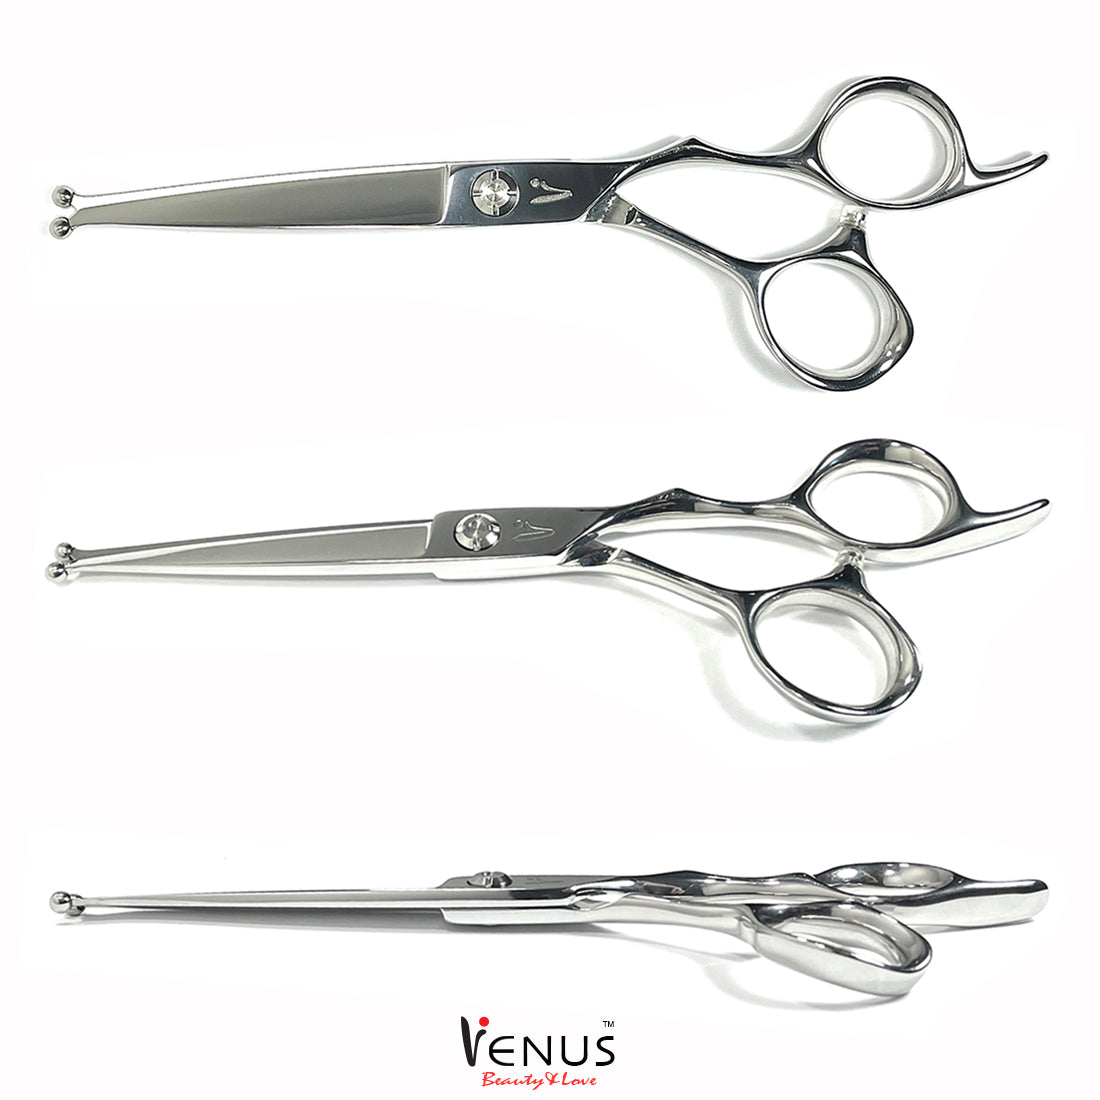 Venus-v360™ Handcrafted Precision Shears-Right Hand